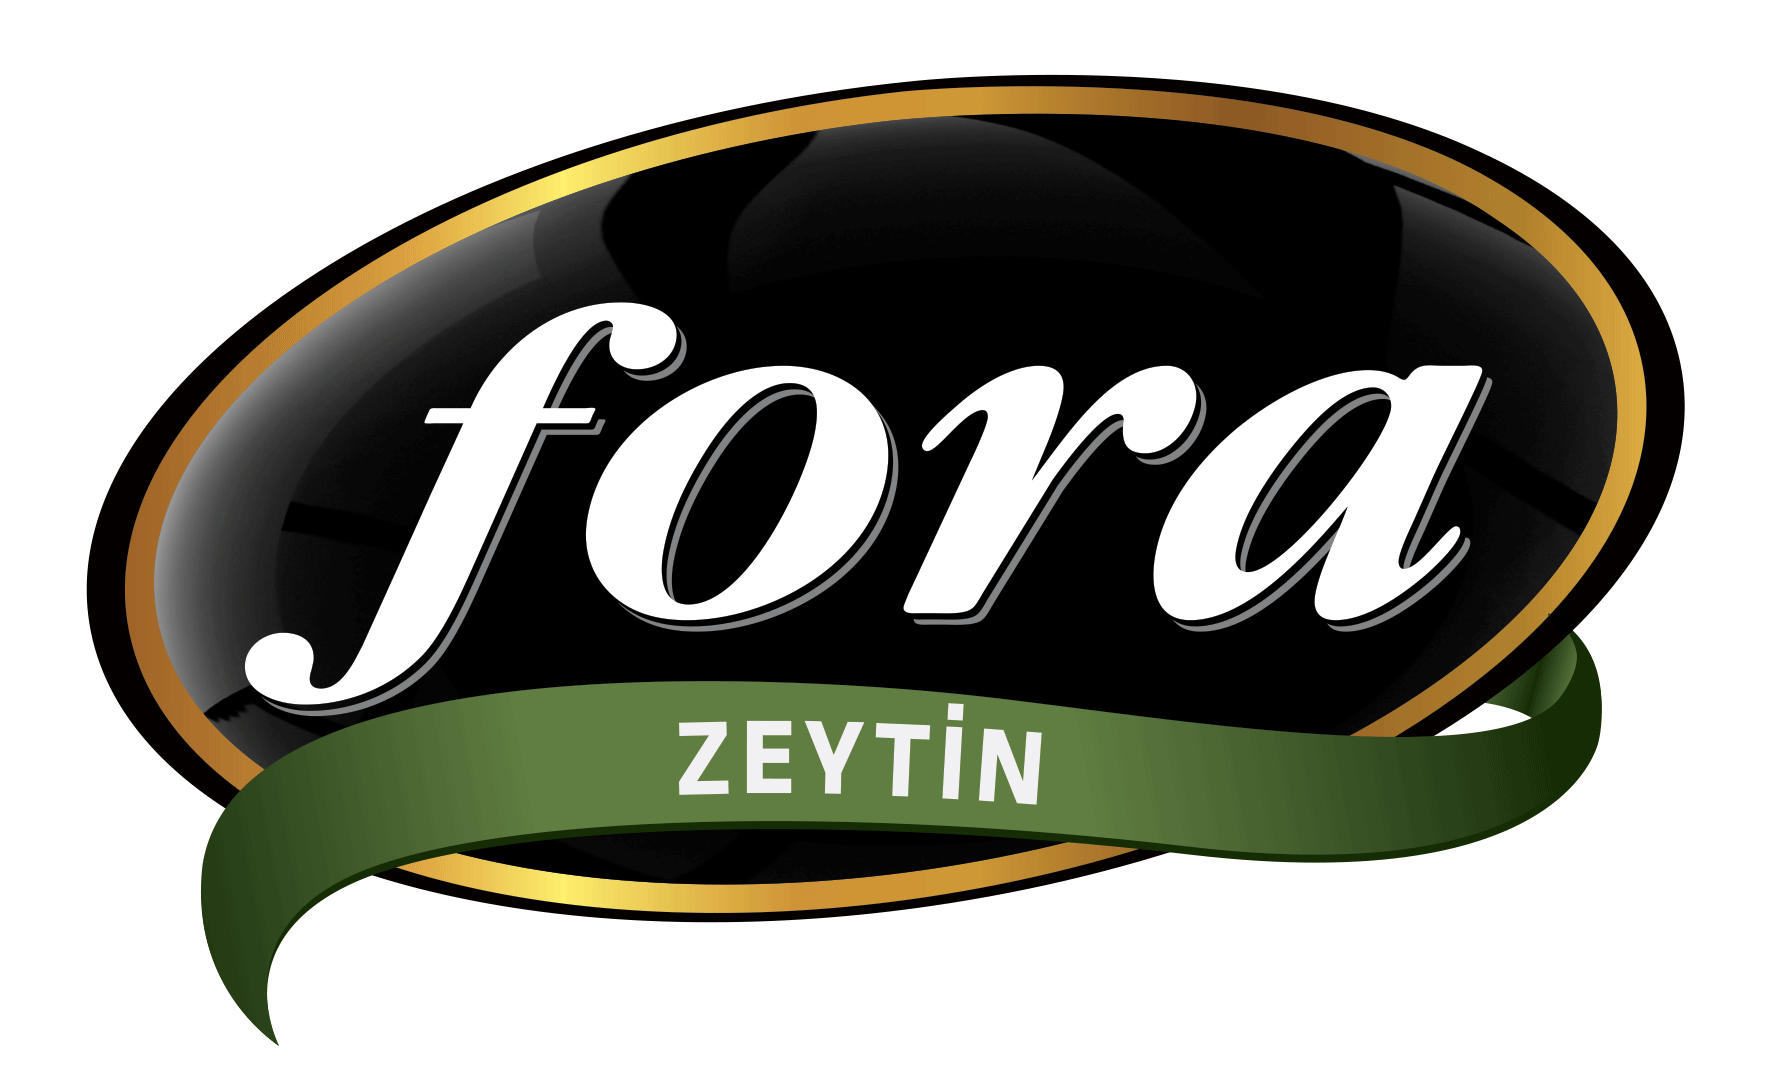 Fora forum fi. Fora Zeytin logo. Fora оливки. Оливка логотип. Логотип кафе оливка.